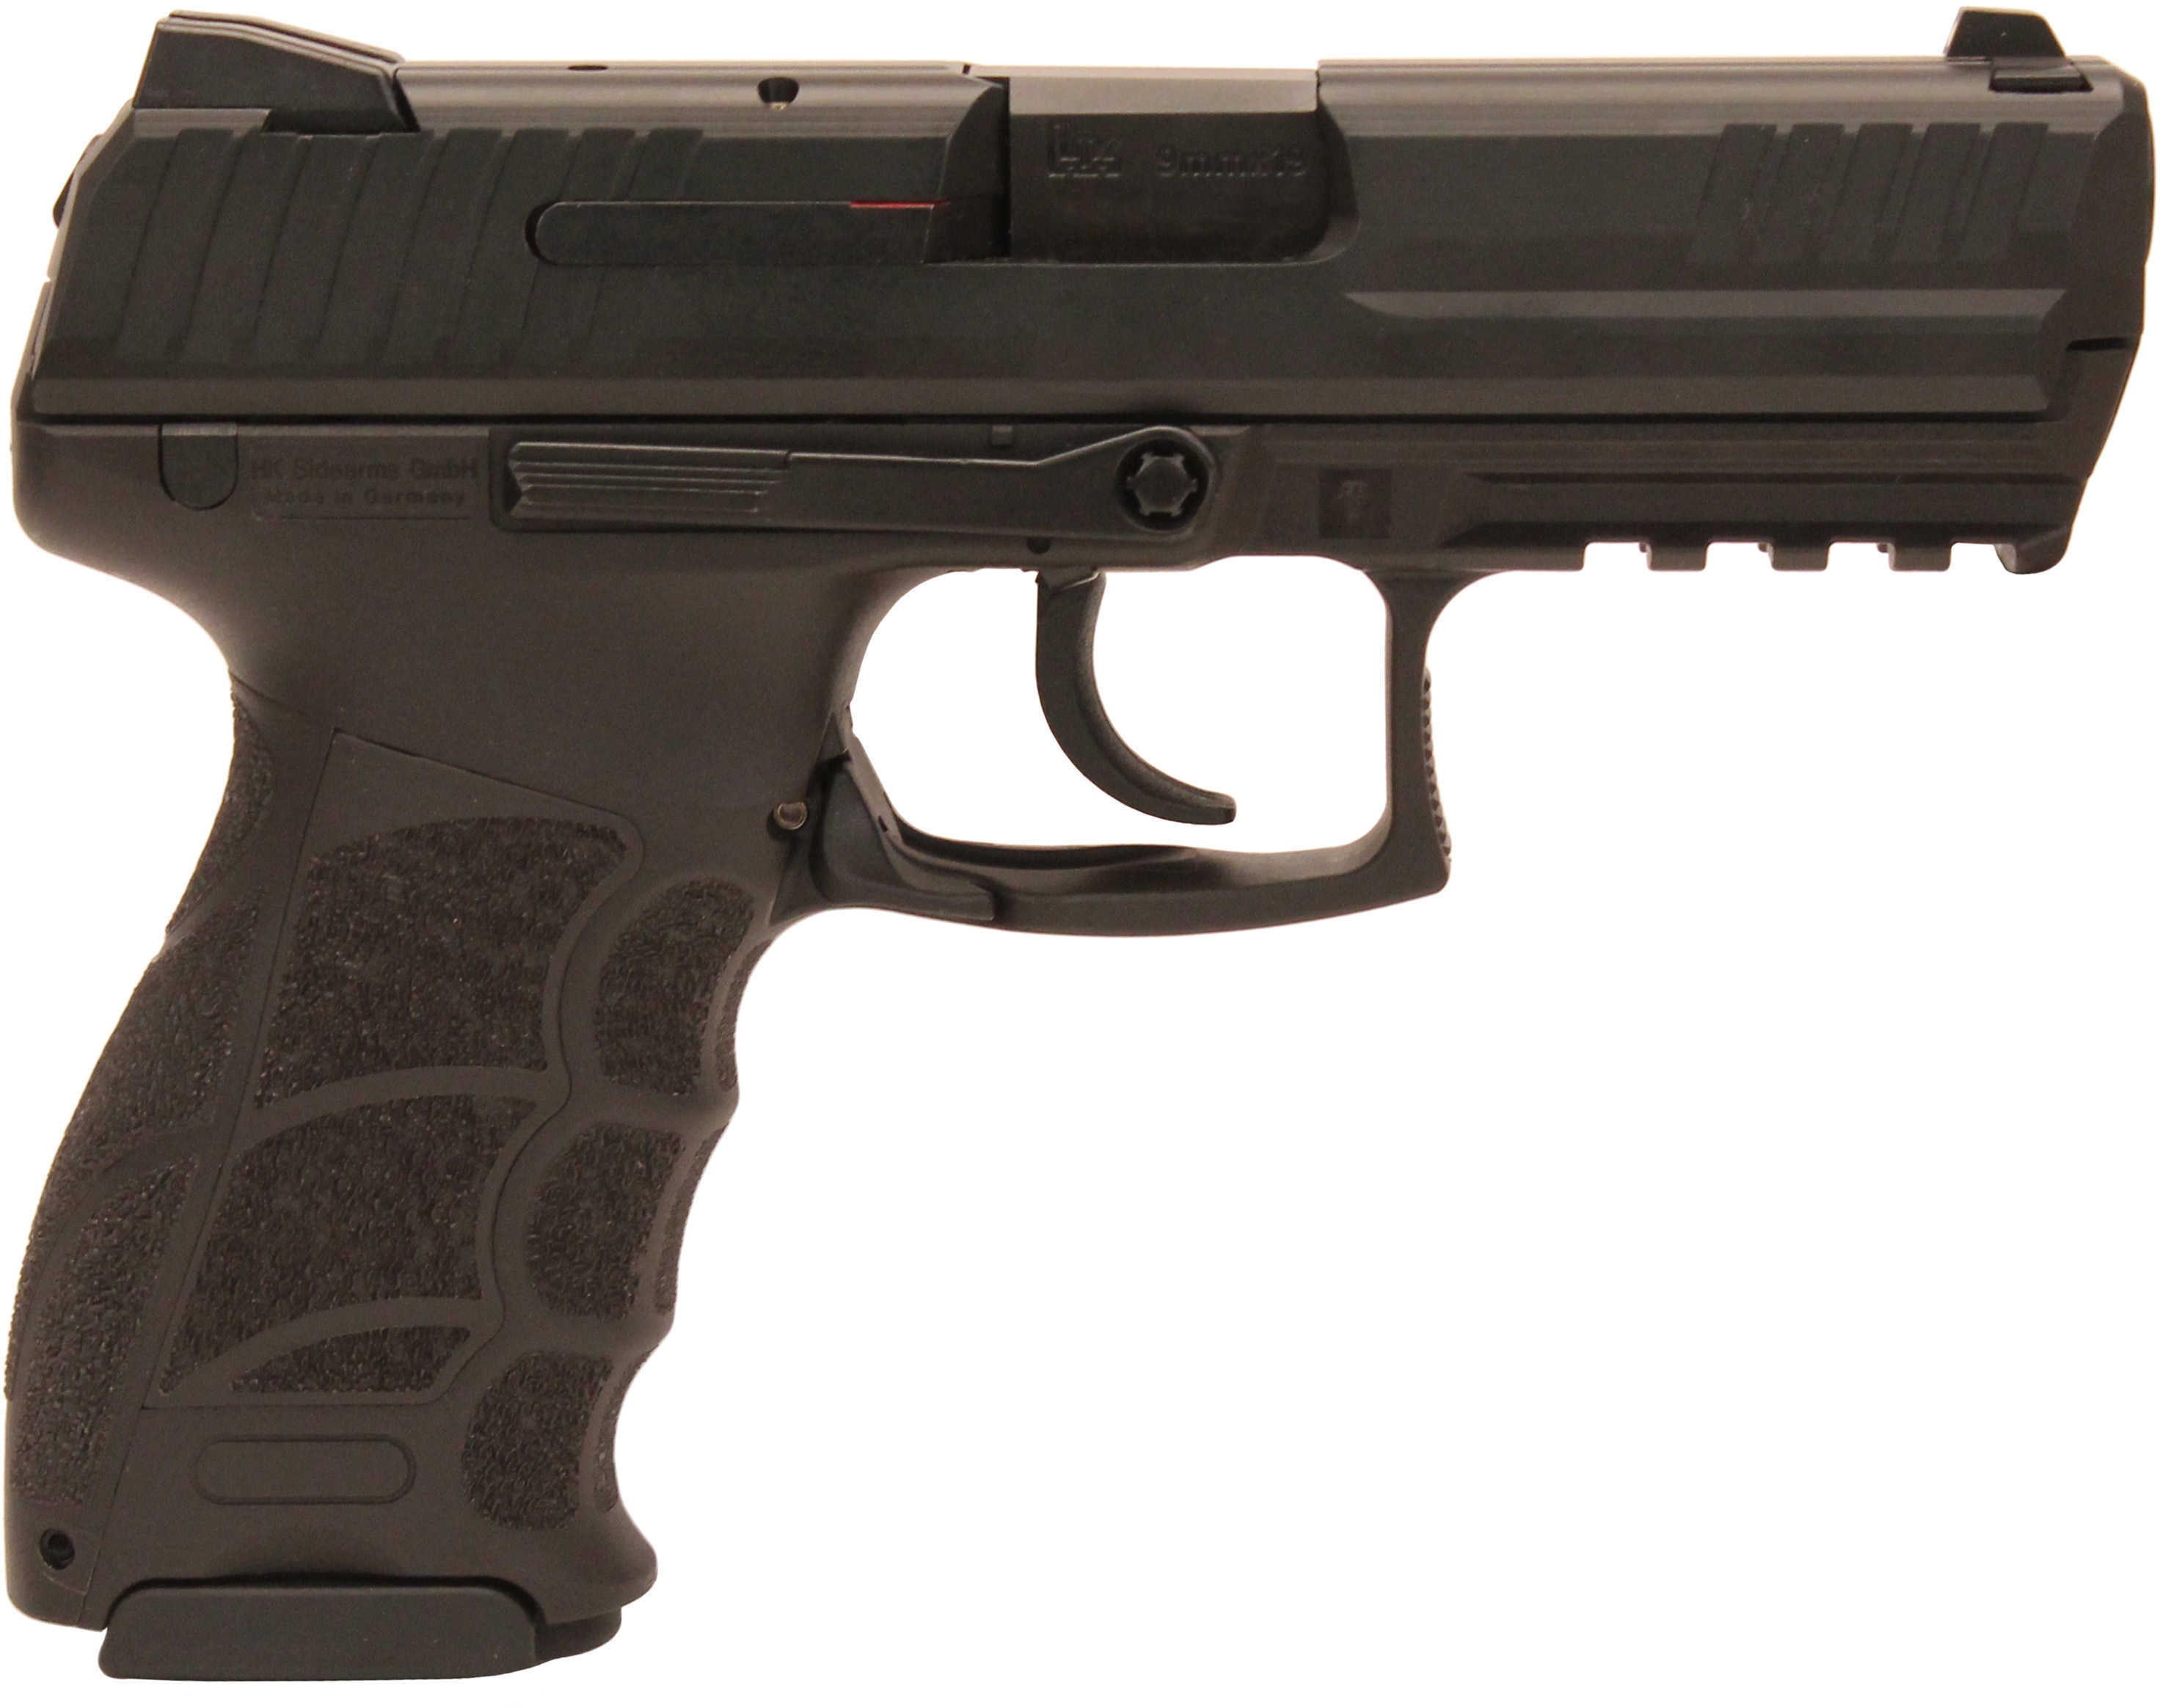 Pistol Heckler & Koch P30S DA/SA 9mm Luger 15 Round M730901-A5